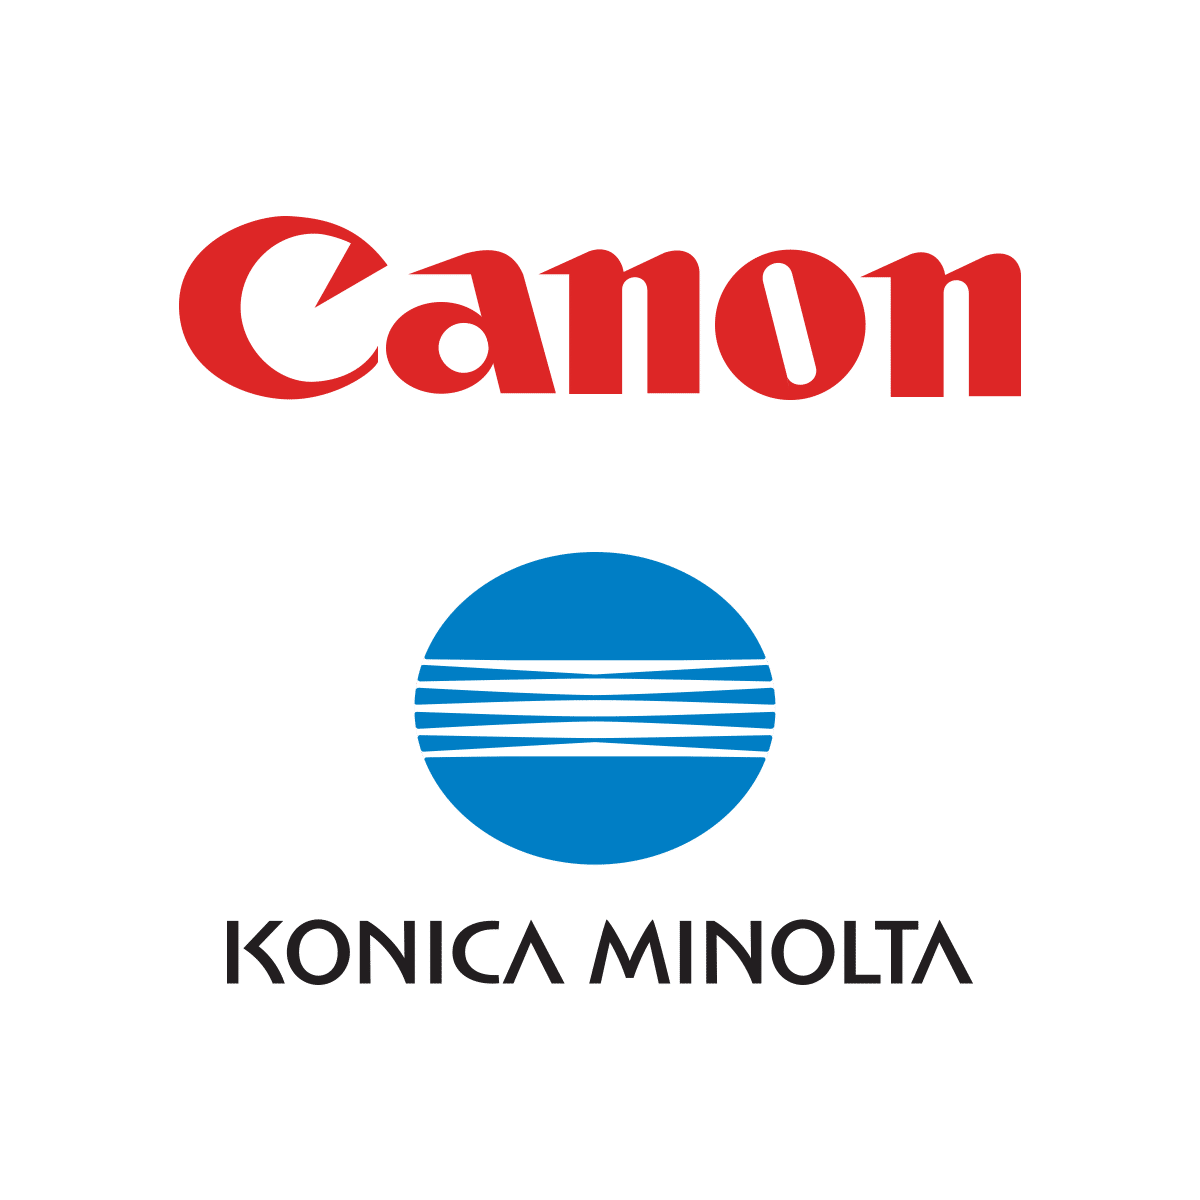 CanonKonica